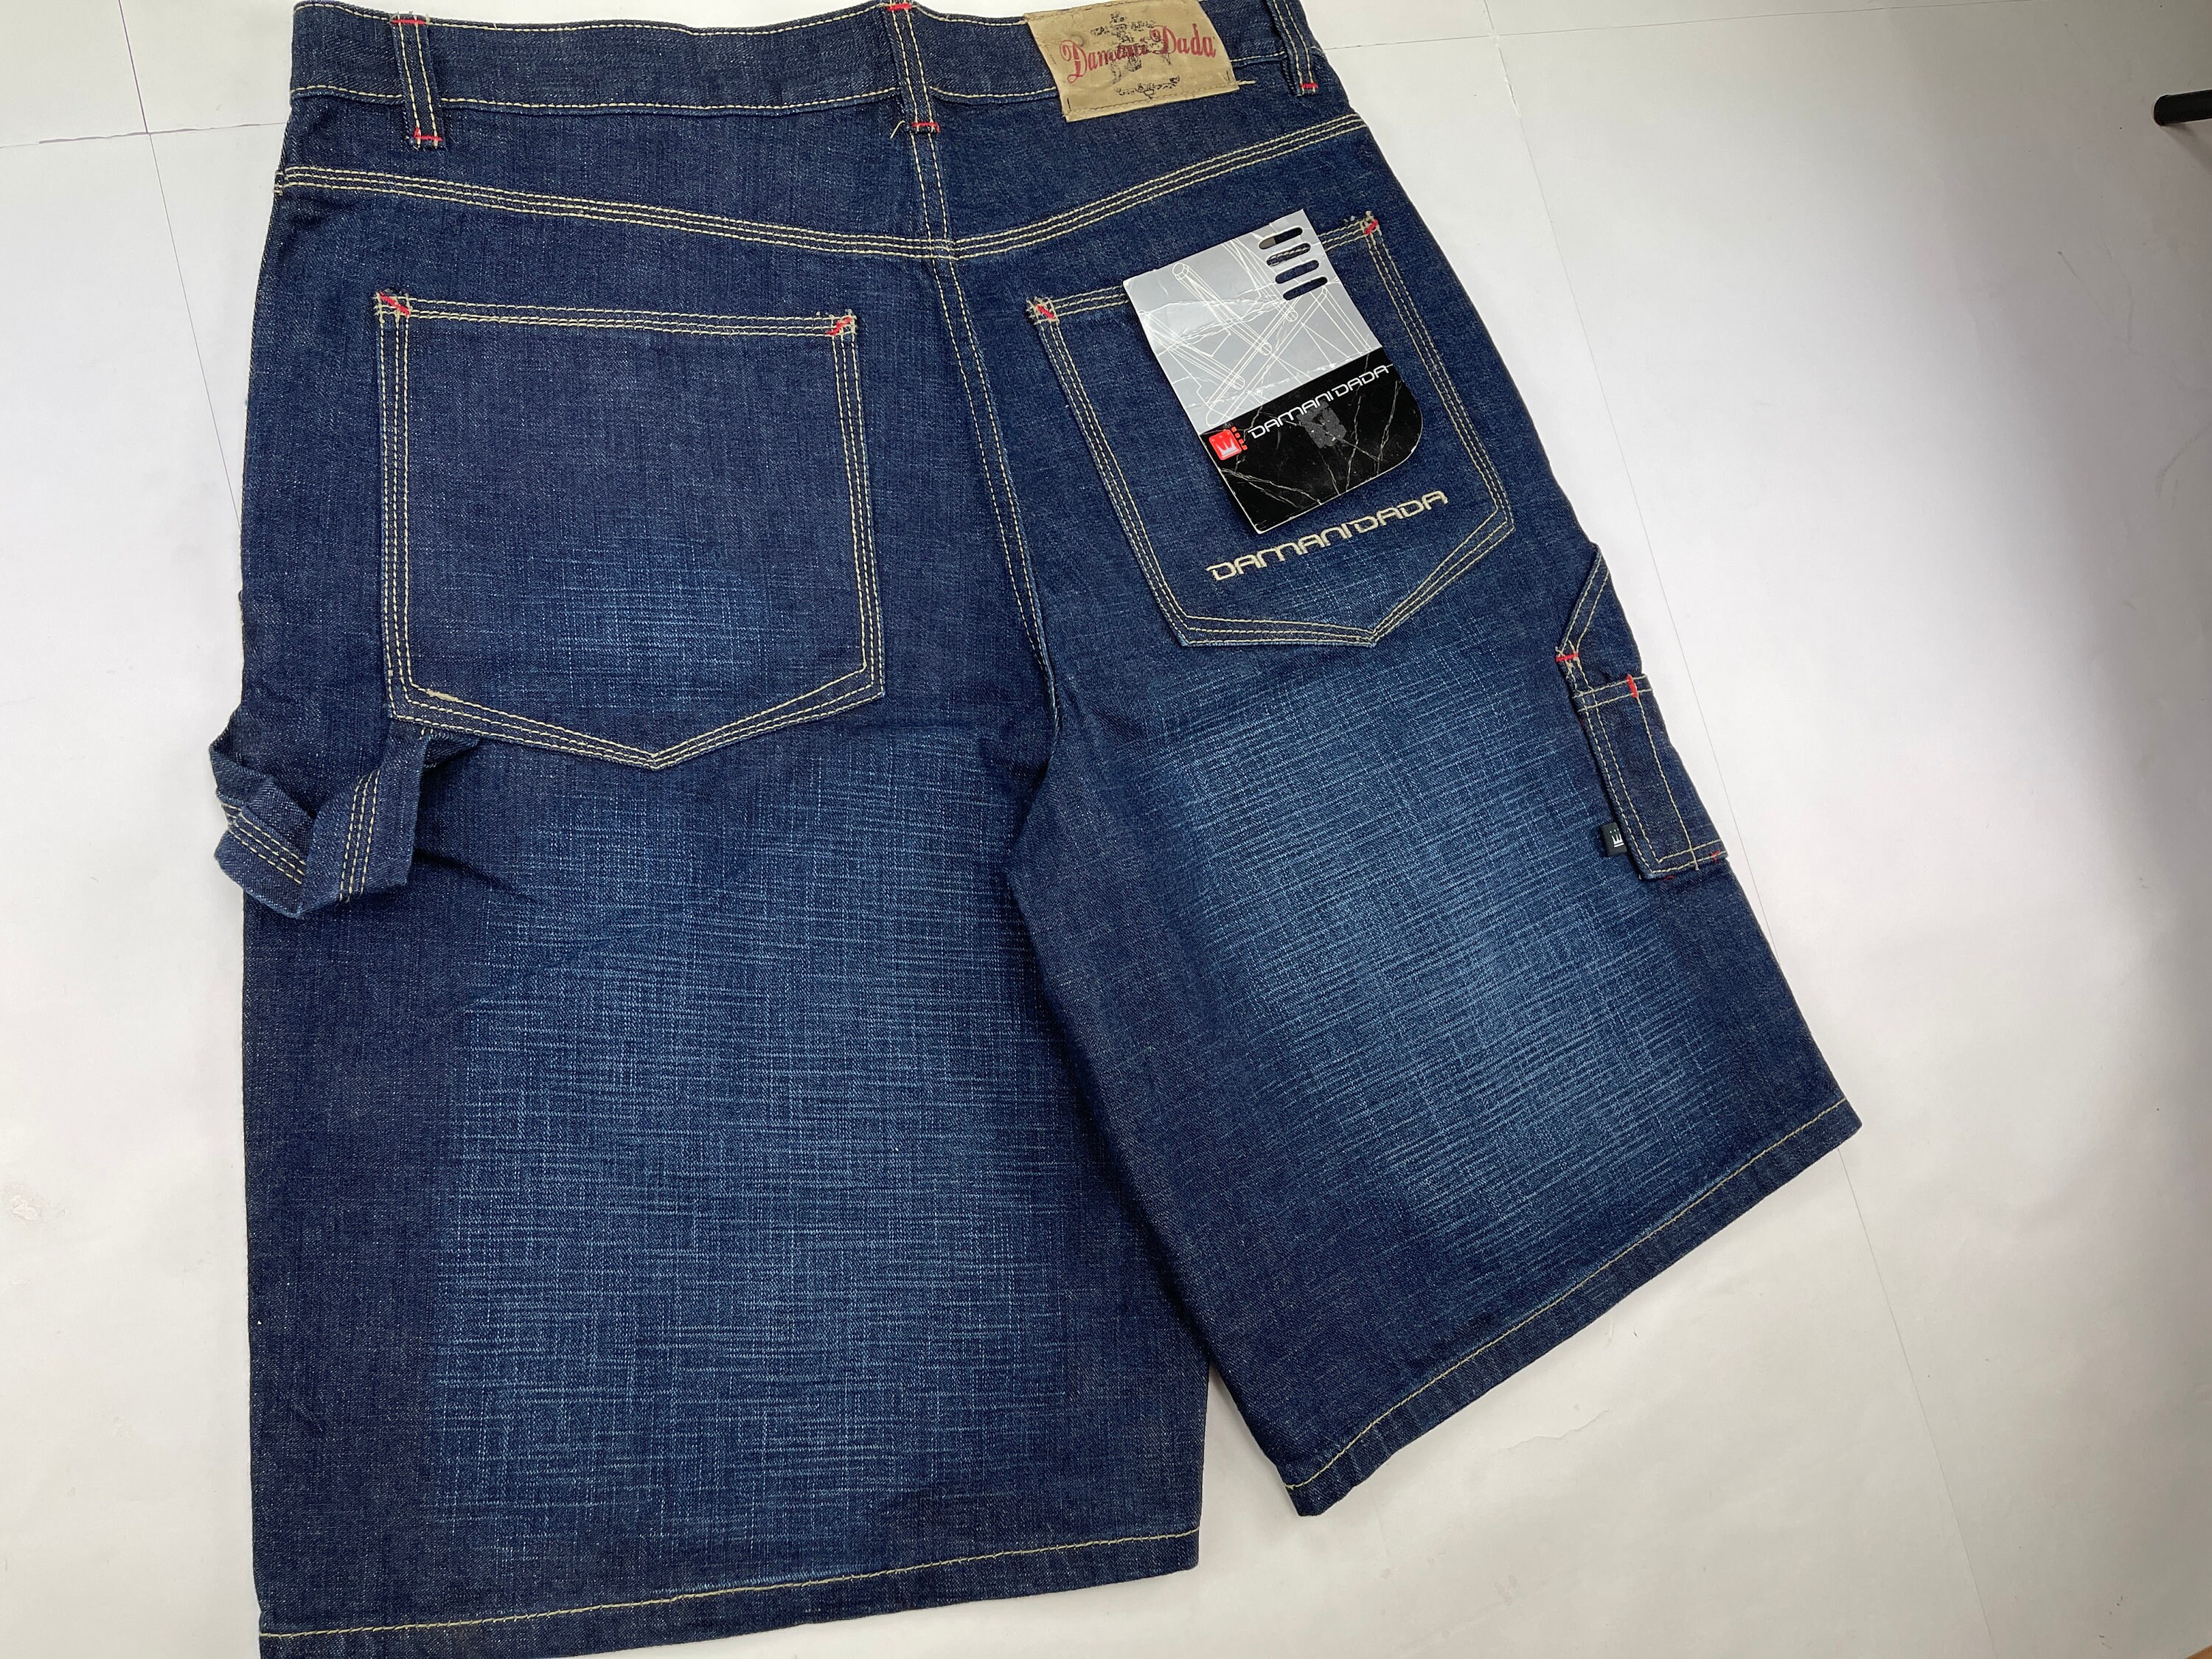 Dada Supreme Jeans Shorts Vintage Damani Baggy Jeans 90s Hip